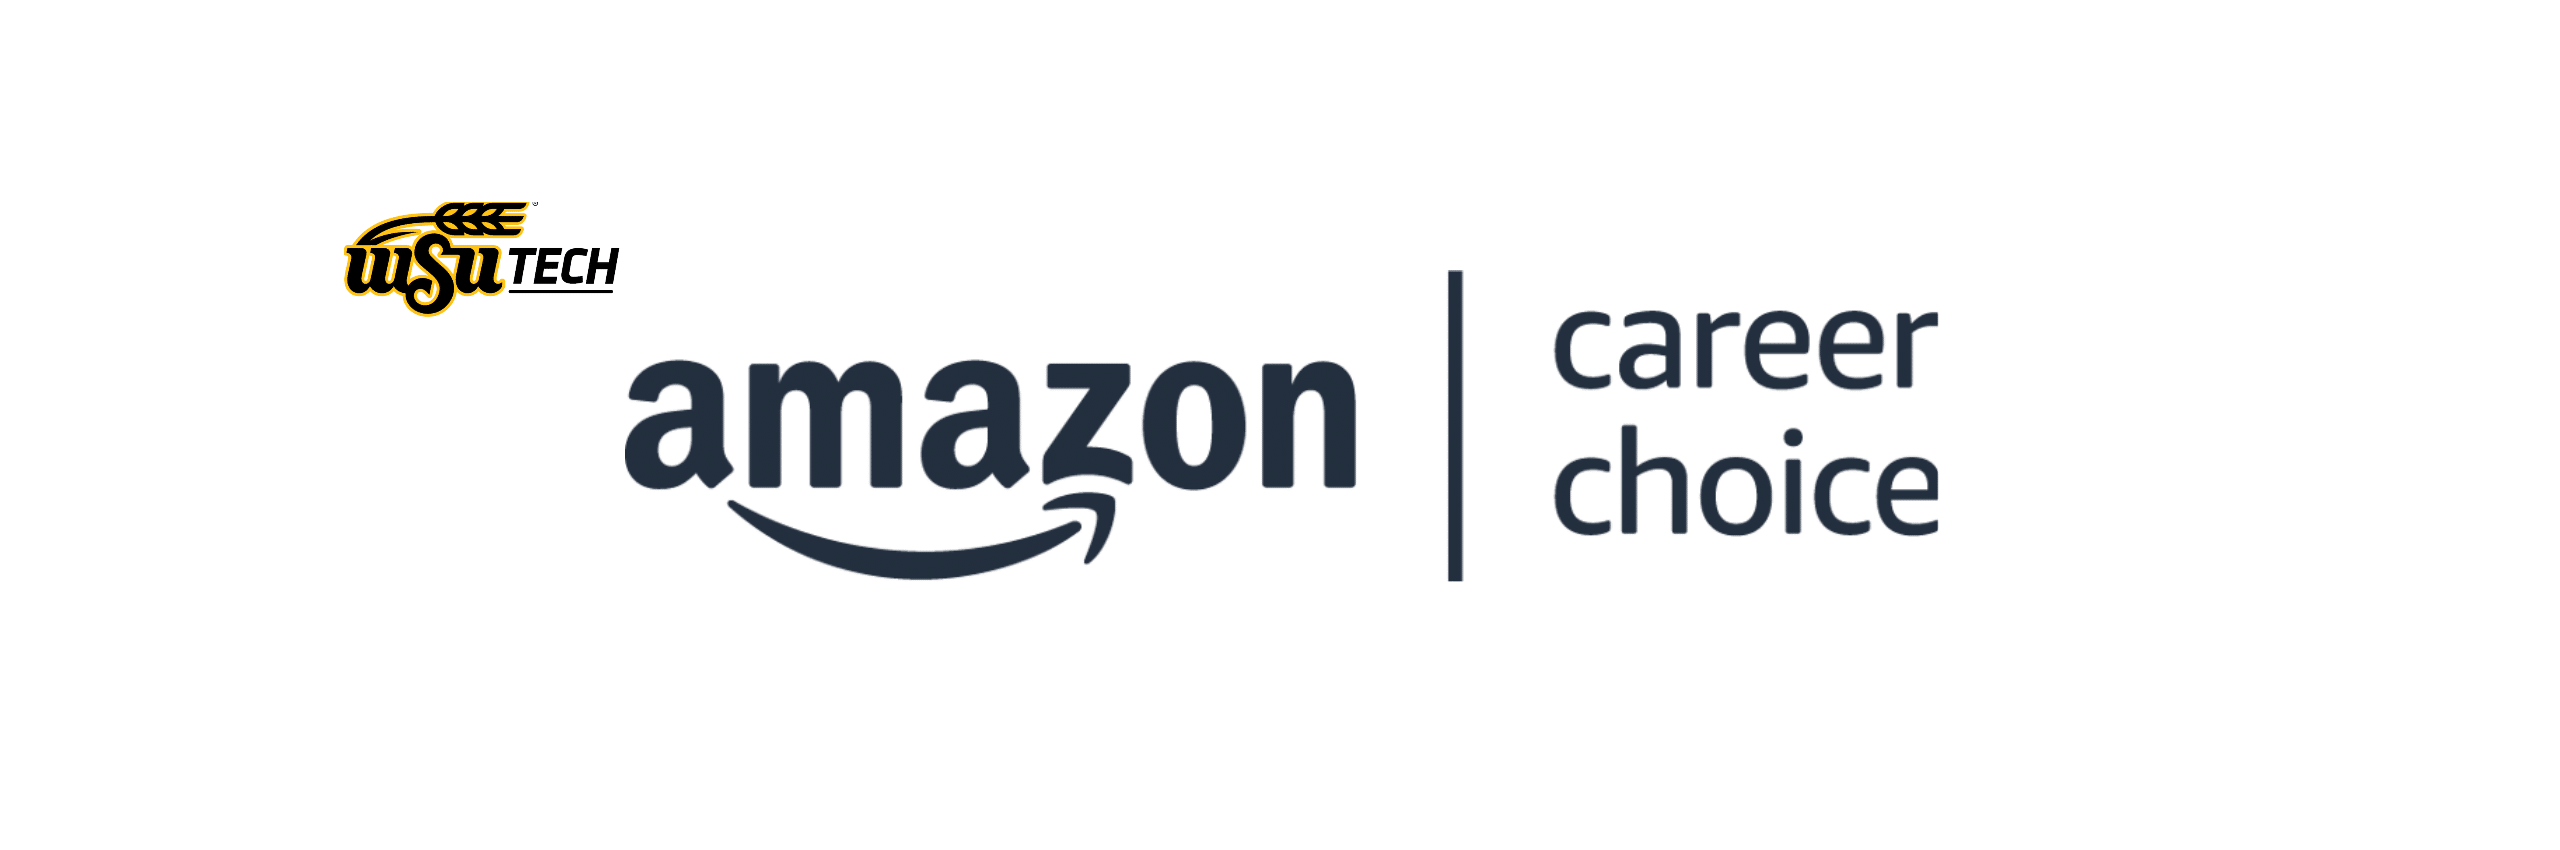 Amazon Career Choice + WSU Tech